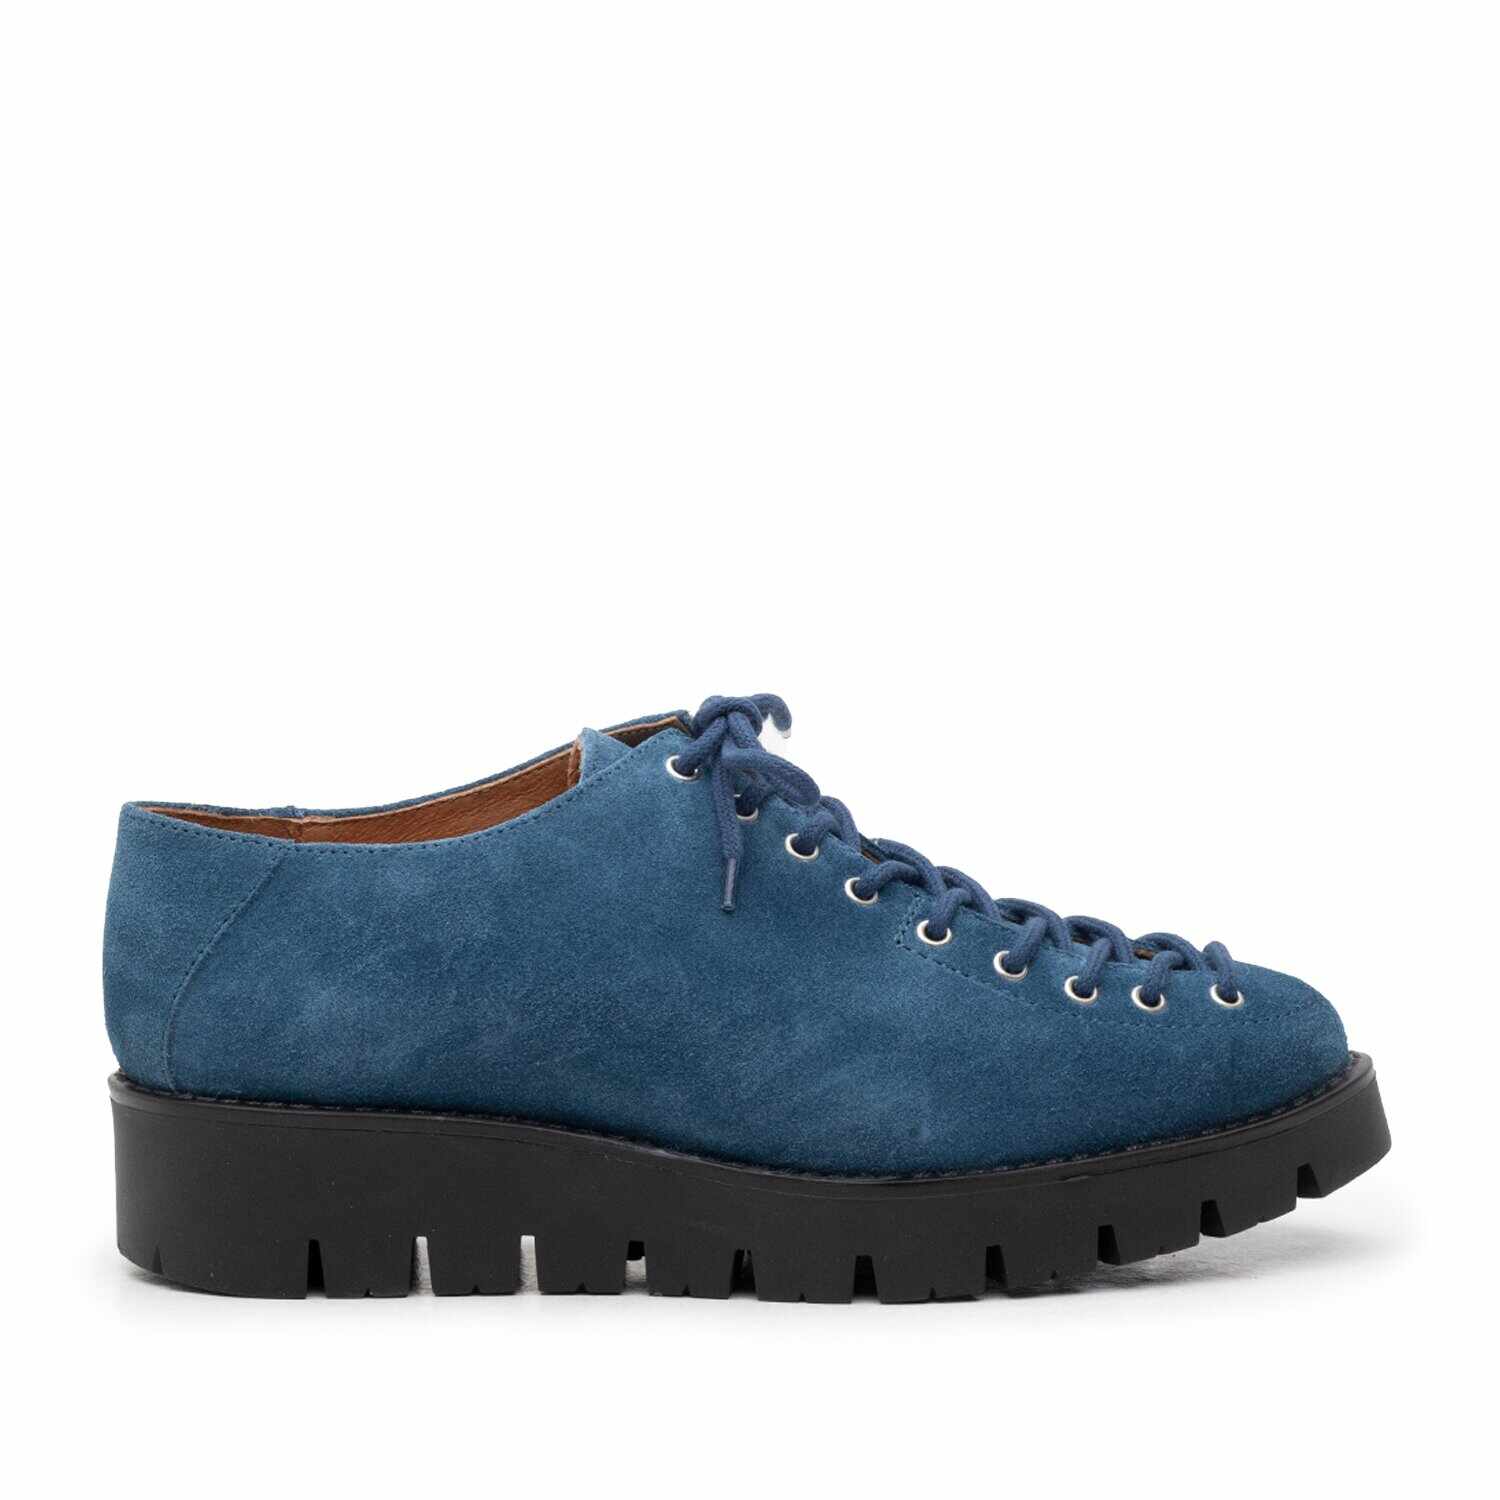 Pantofi casual dama cu siret pana in varf din piele naturala, Leofex- 194 blue inchis velur